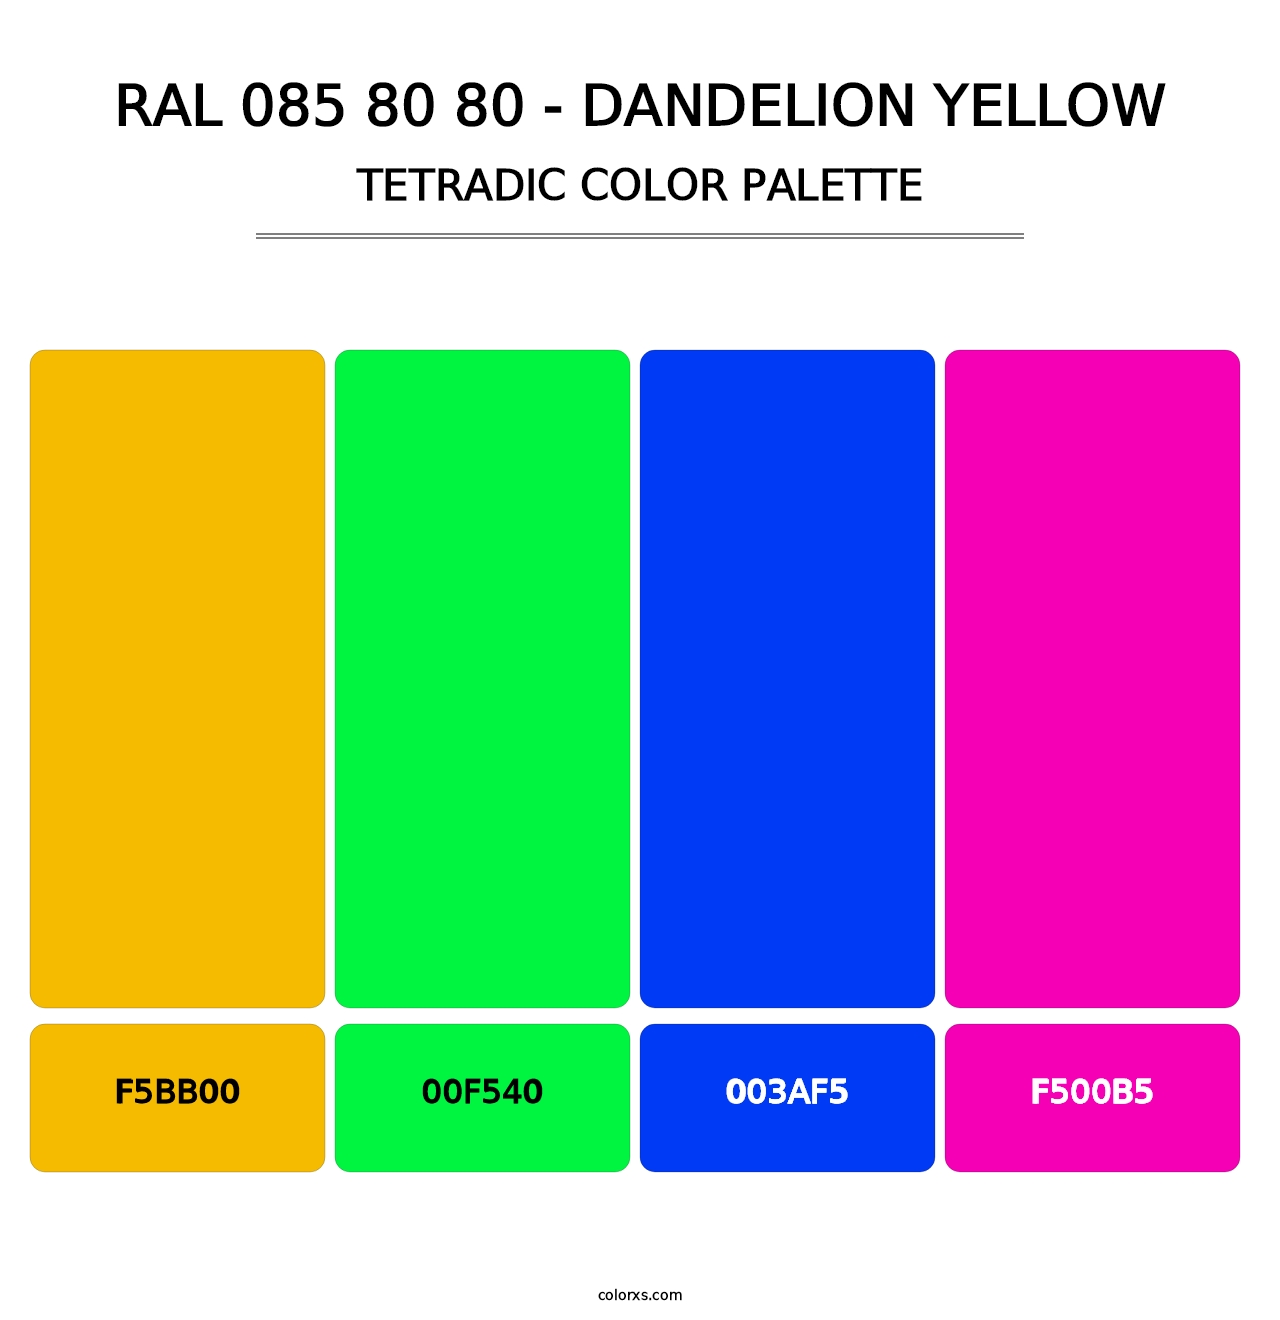 RAL 085 80 80 - Dandelion Yellow - Tetradic Color Palette